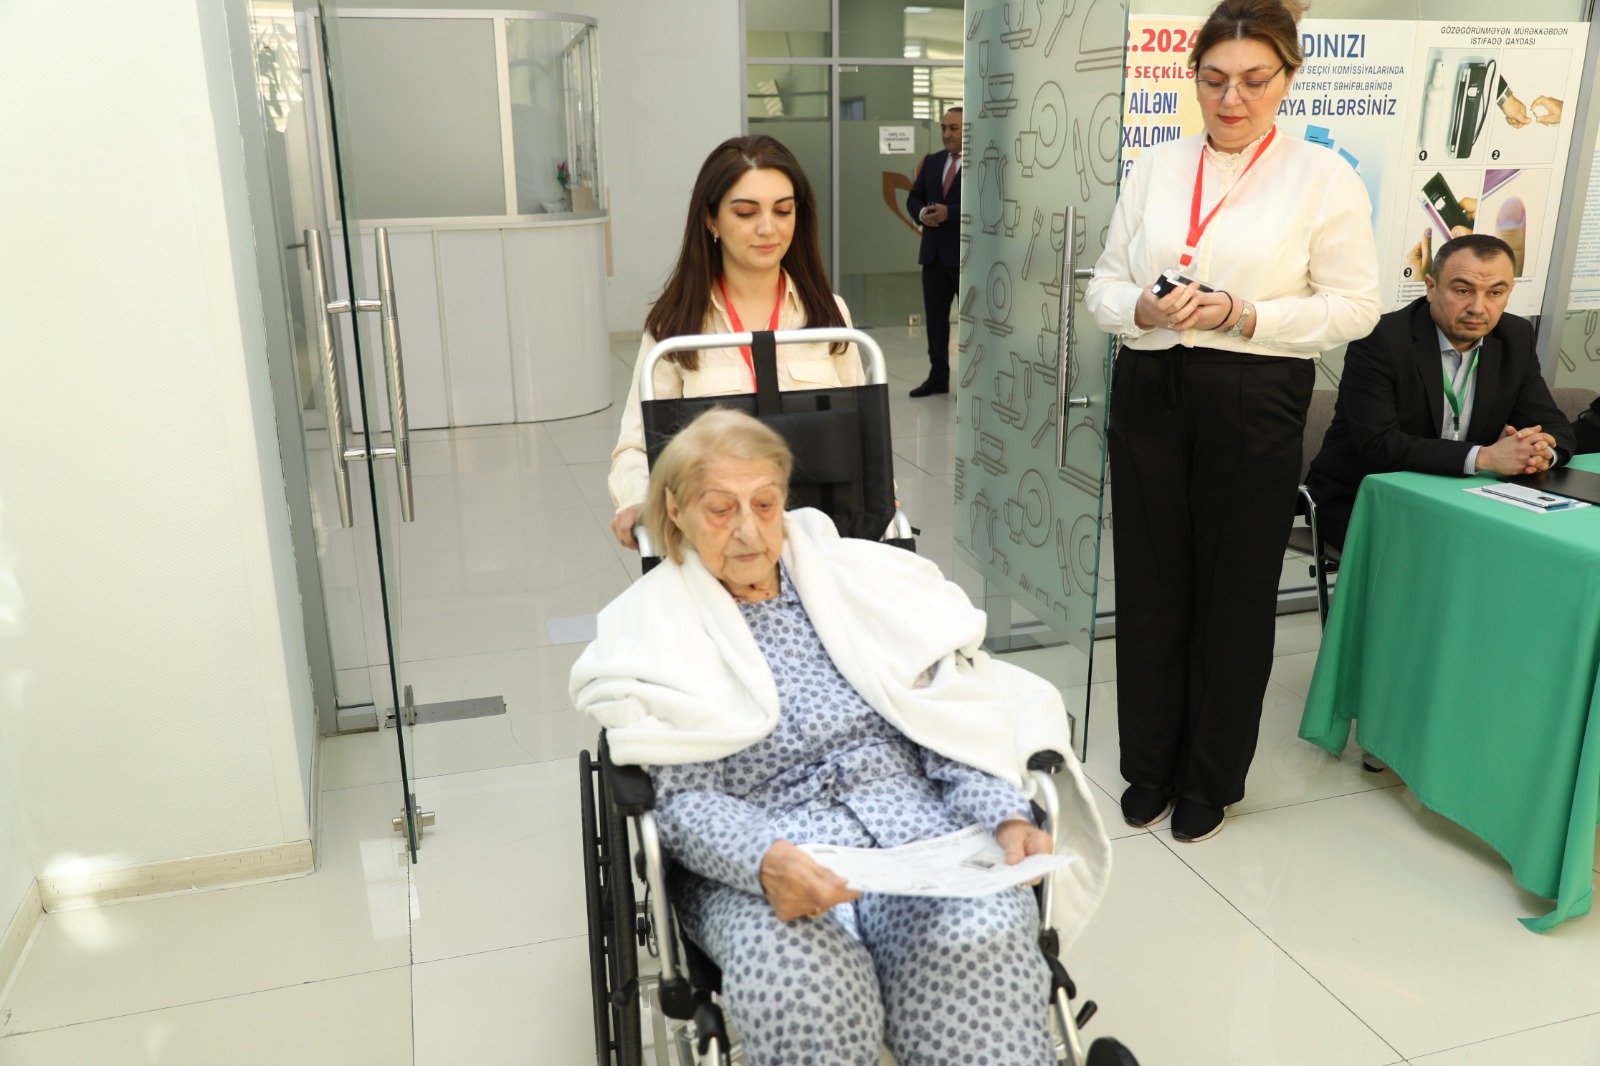 Oldest female elector votes in Azerbaijan's presidential election (PHOTO)